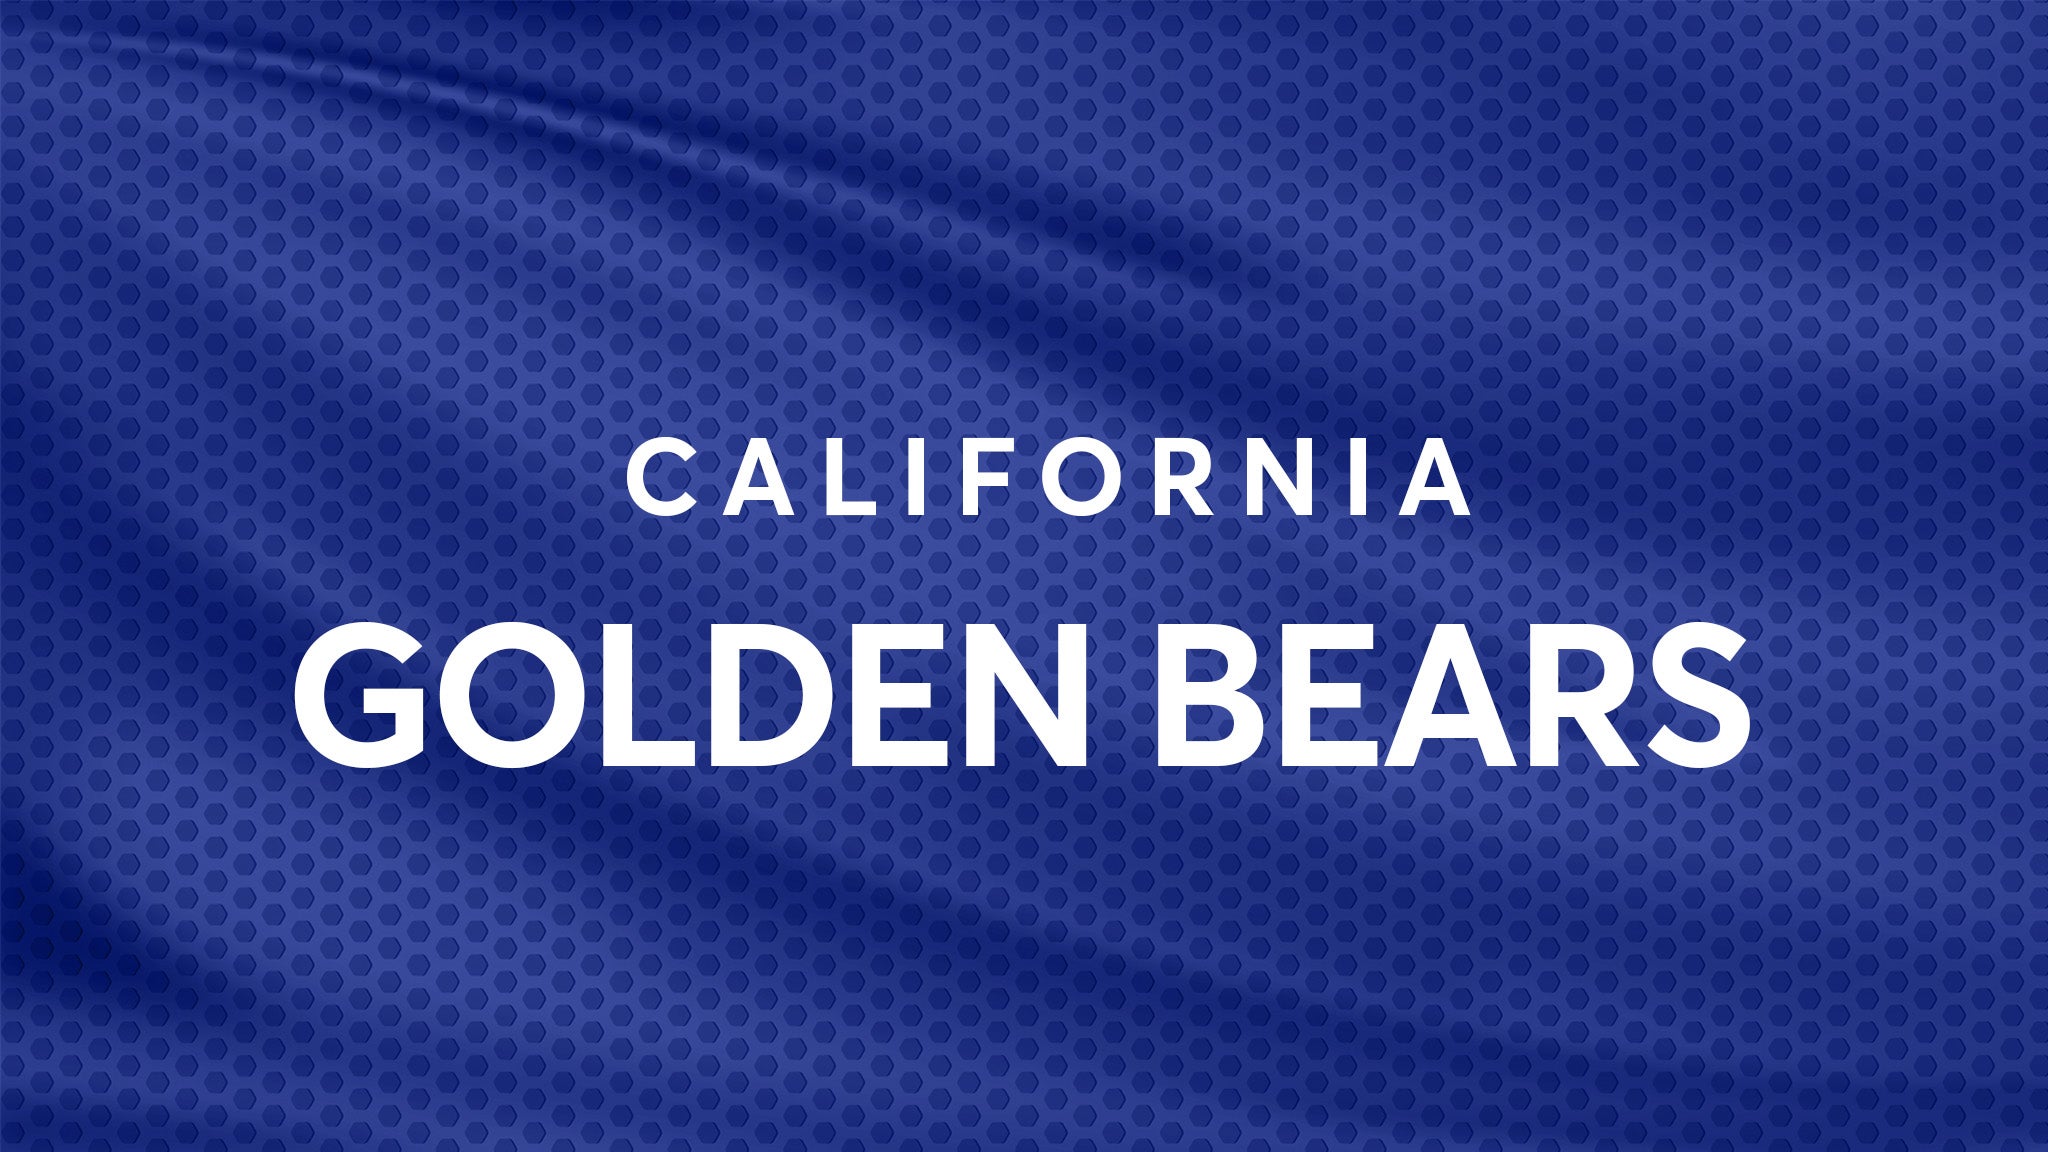 California Golden Bears Football vs. Stanford Cardinal Football hero